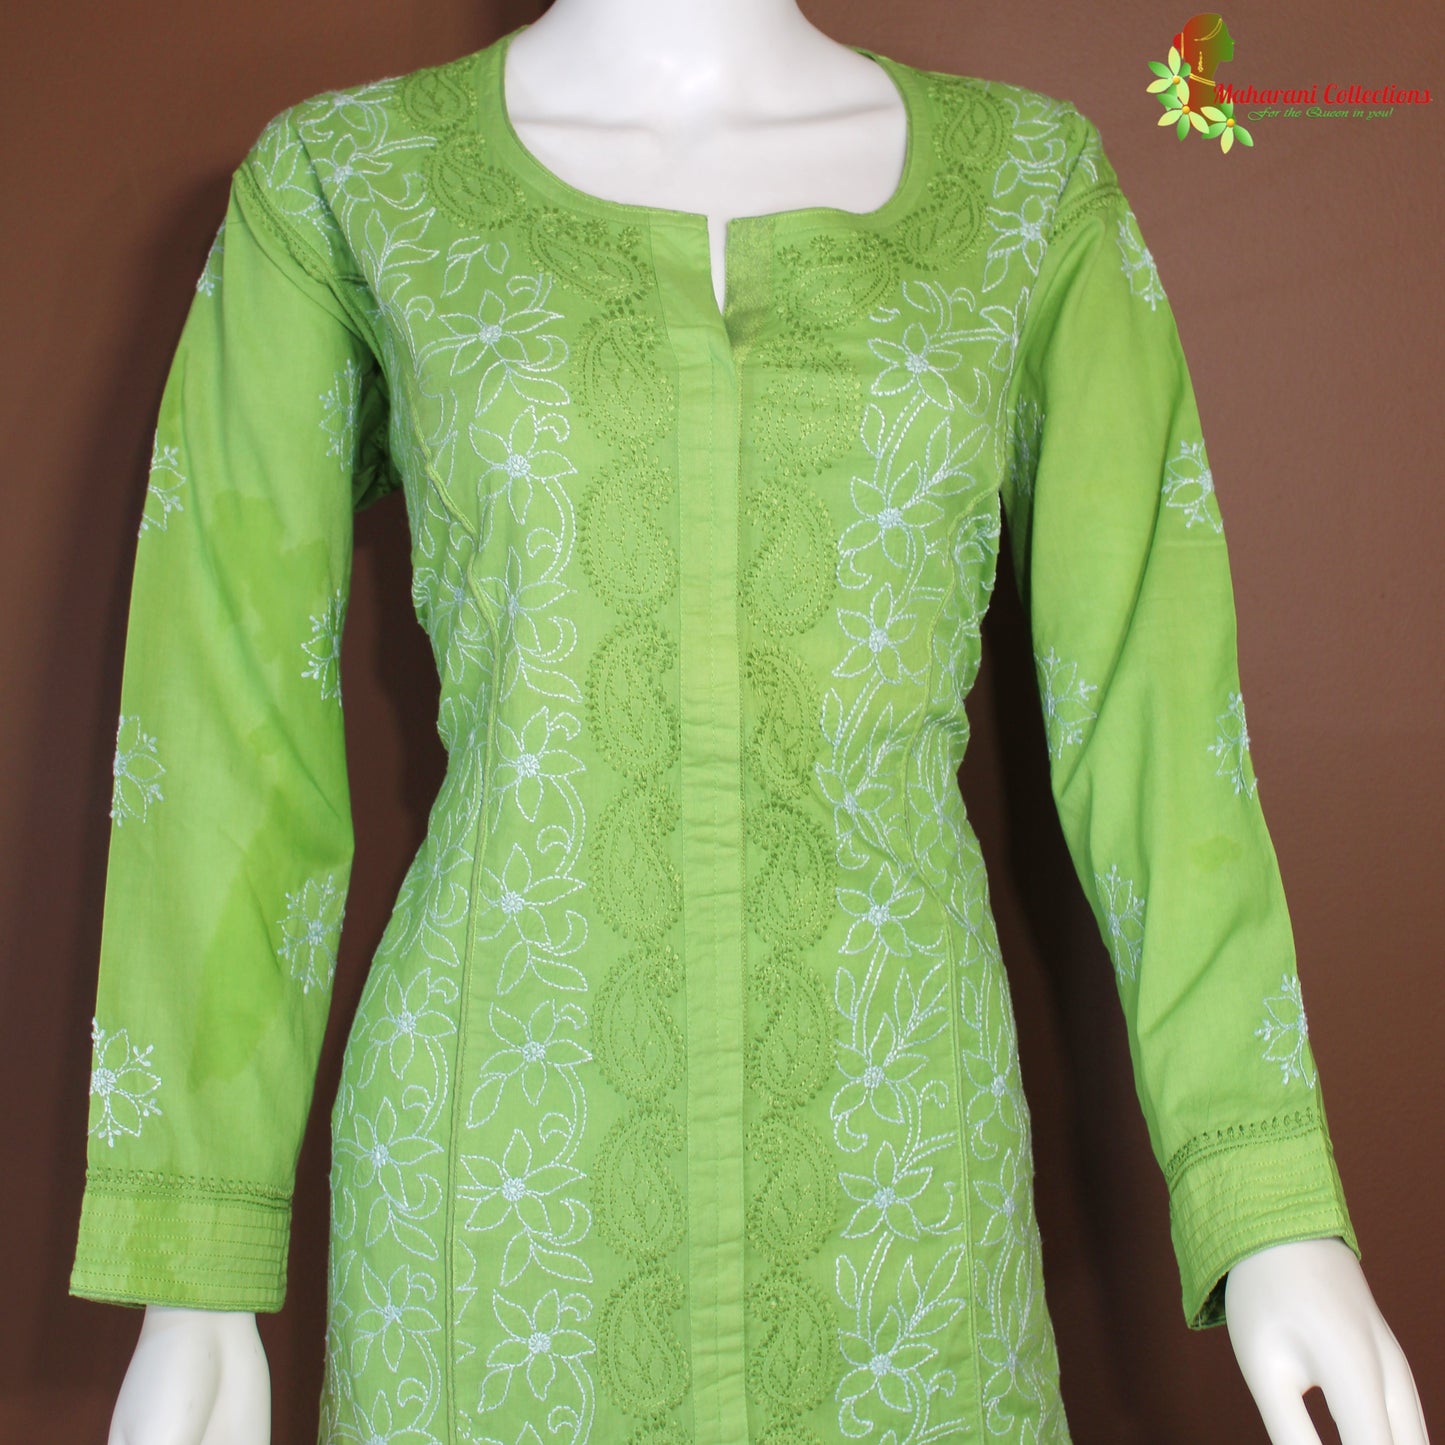 Maharani's Lucknowi Chikankari Pant Suit - Green (XL) - Pure Cotton